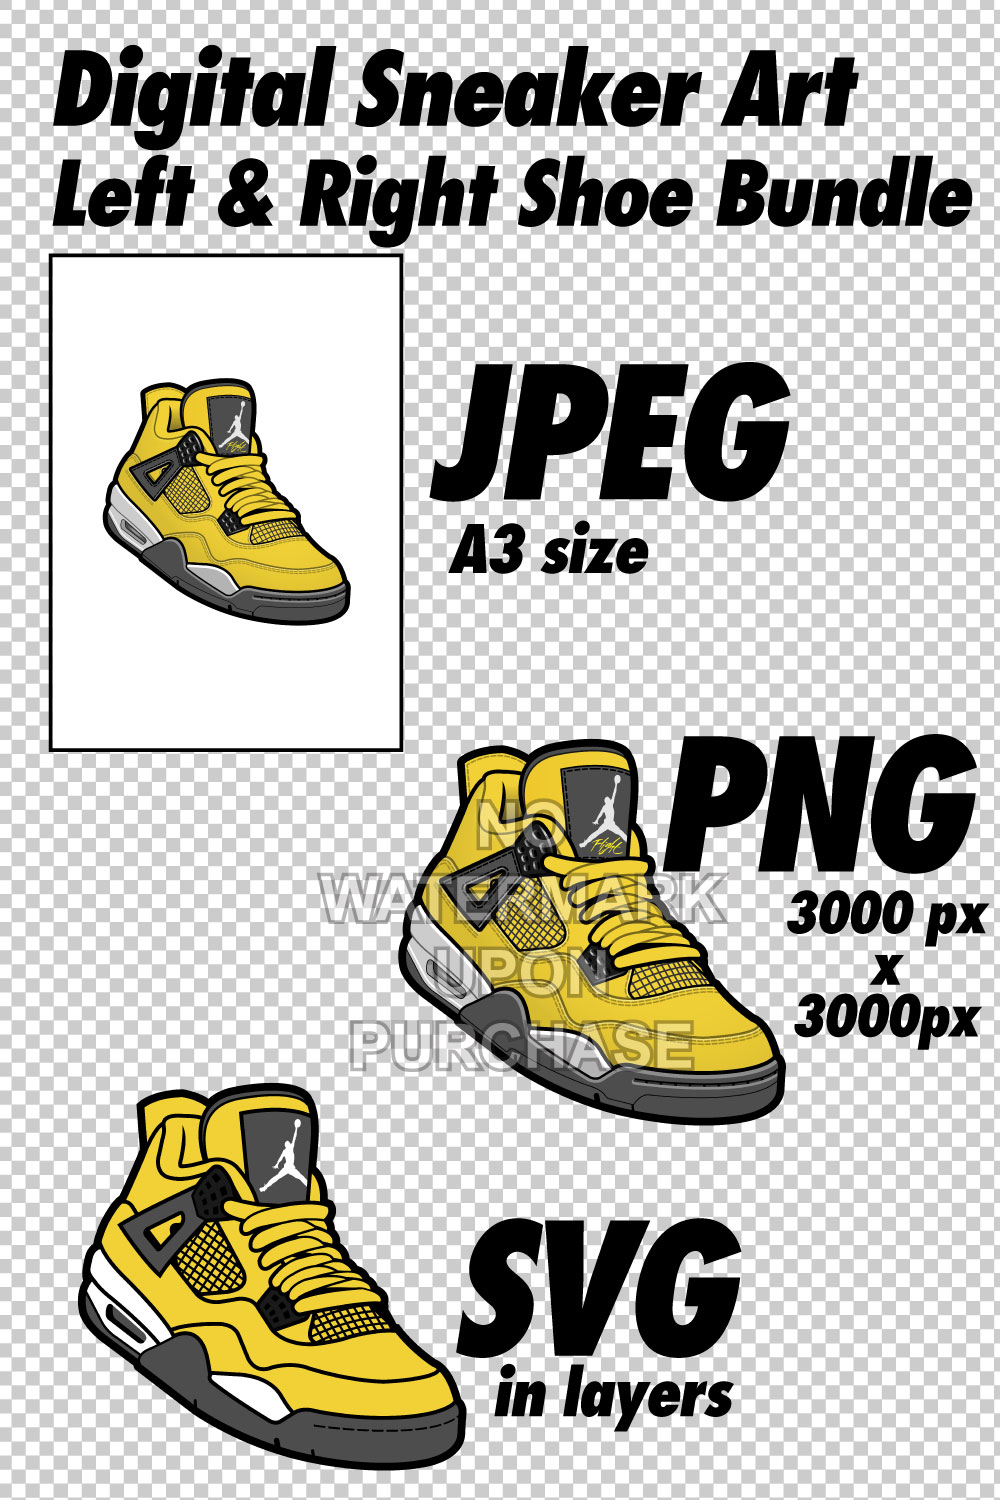 Air Jordan 4 Lightning JPEG PNG SVG Sneaker Art Right & Left shoe bundle with lace swap Digital Download pinterest preview image.